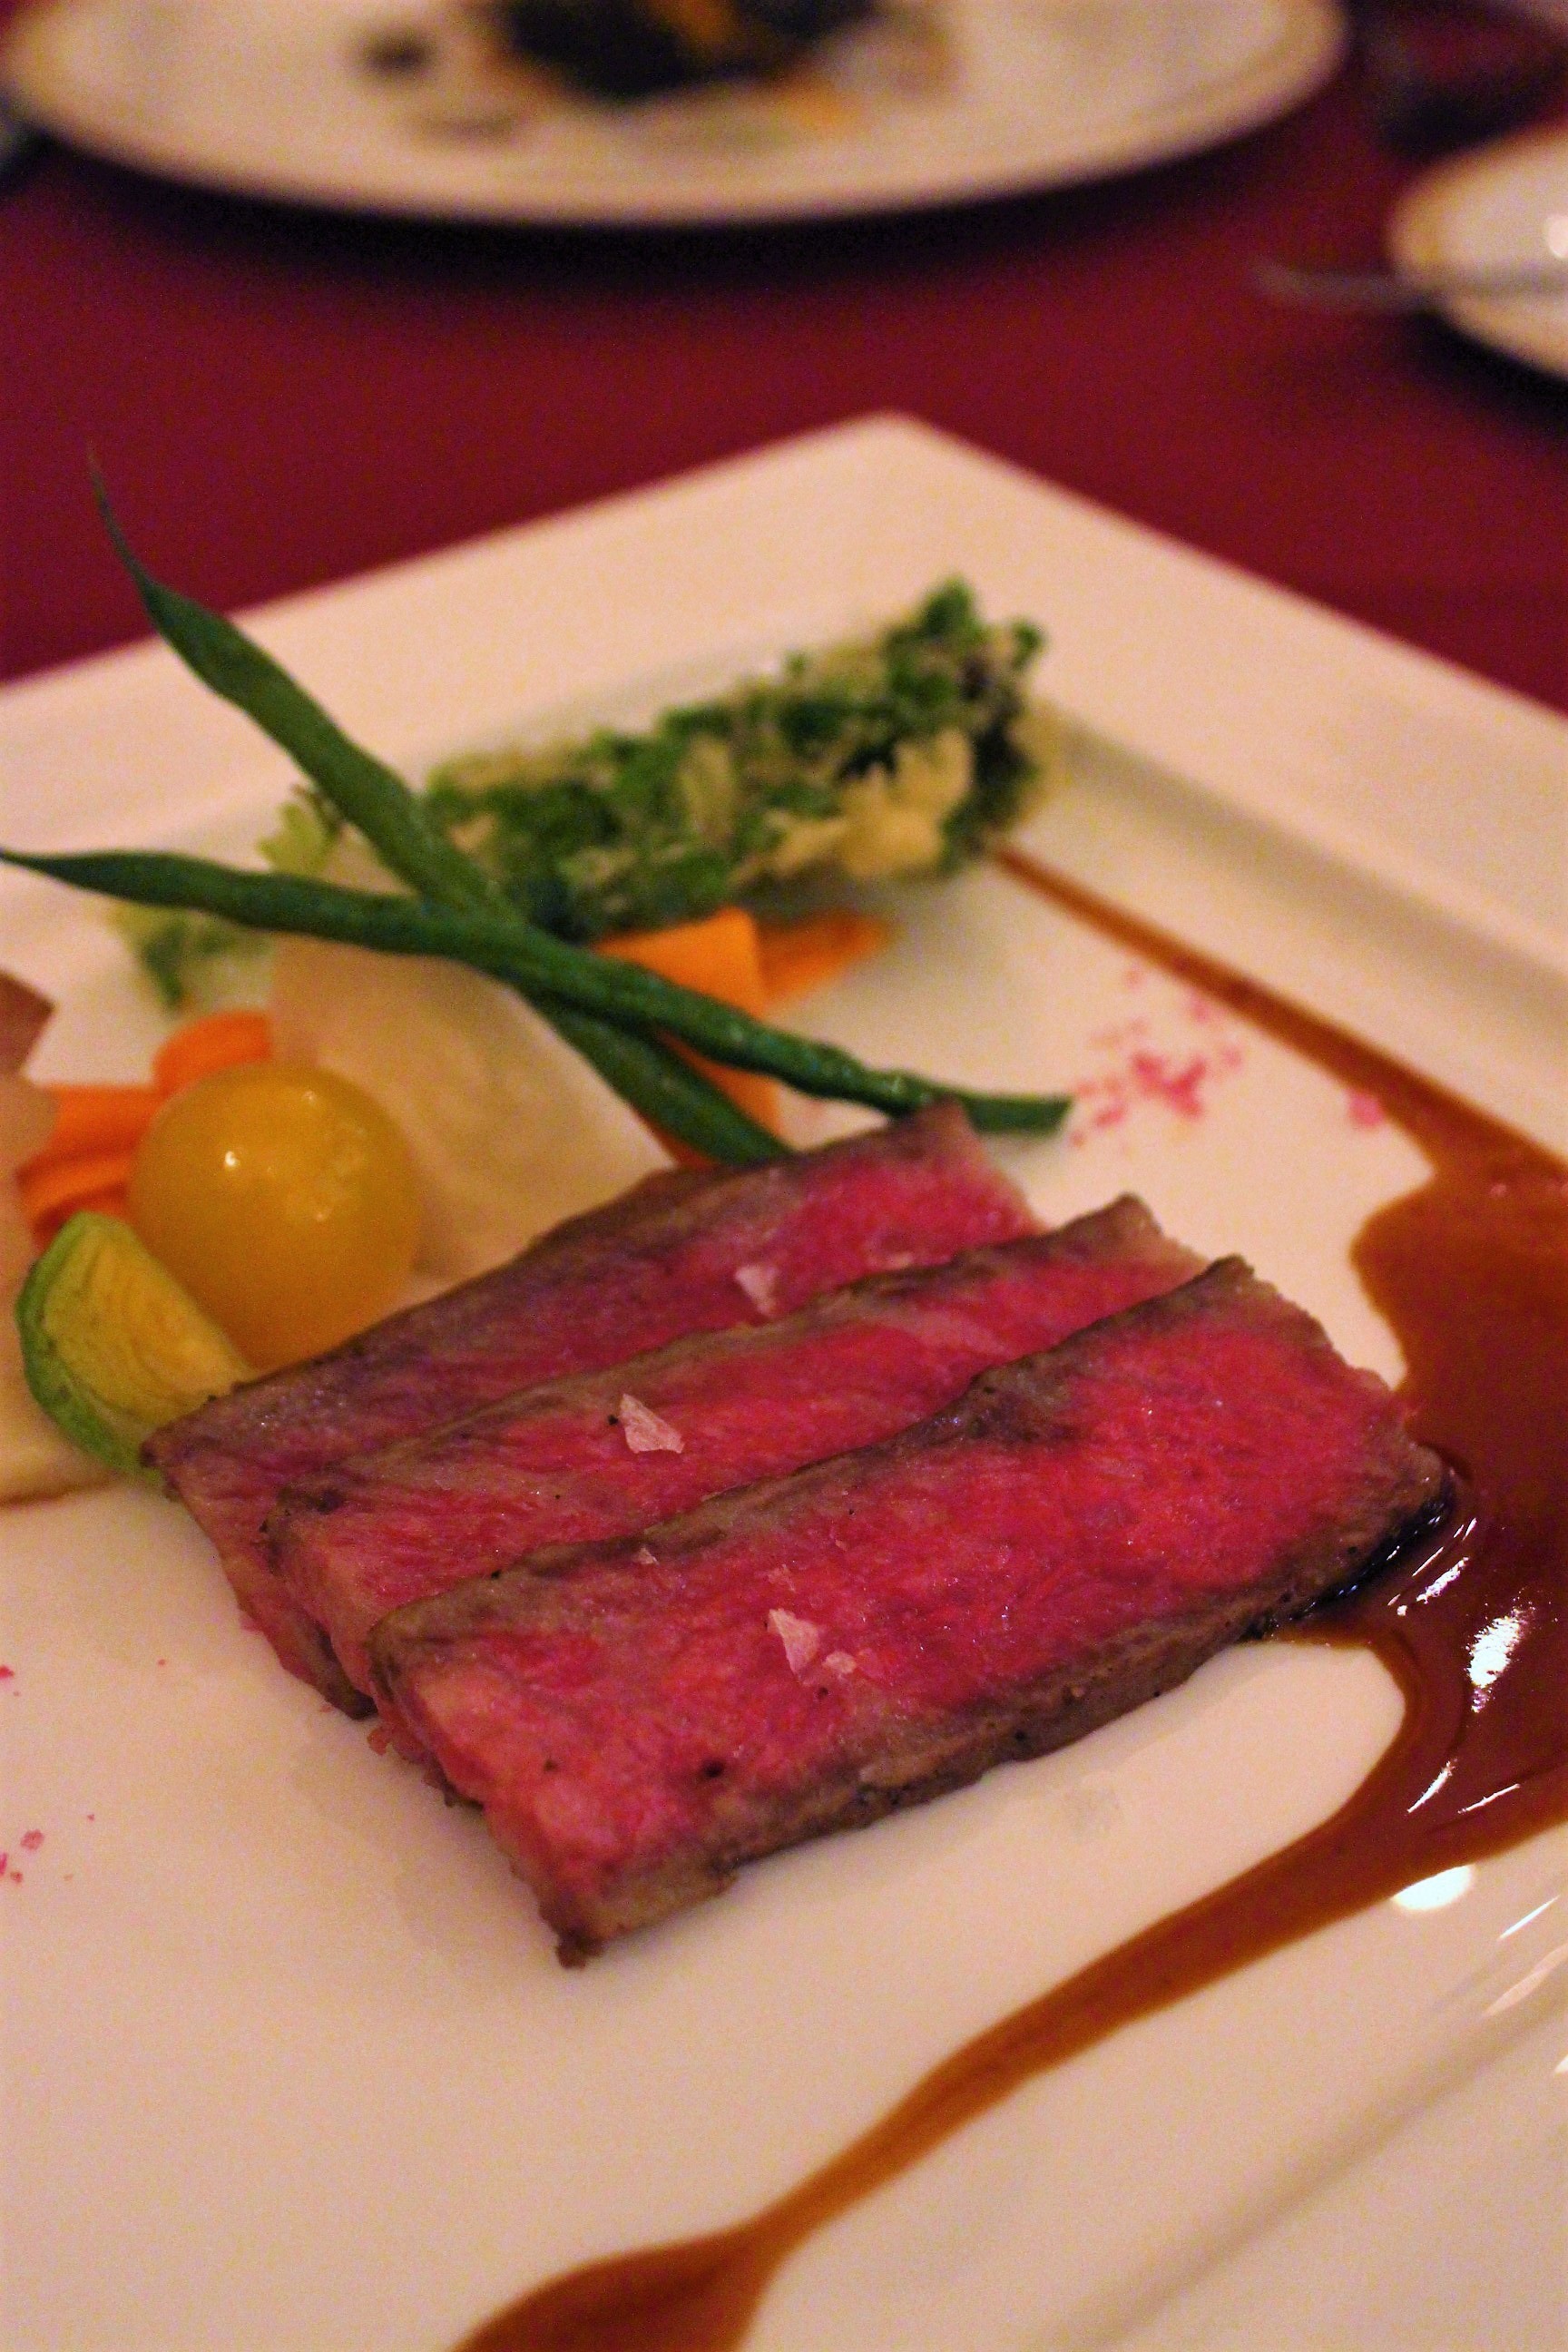 Roasted Kuroge Wagyu Beef topped with Madeira Sauce and Pink Crystal Salt at Magellan’s in DisneySea, Tokyo, Japan